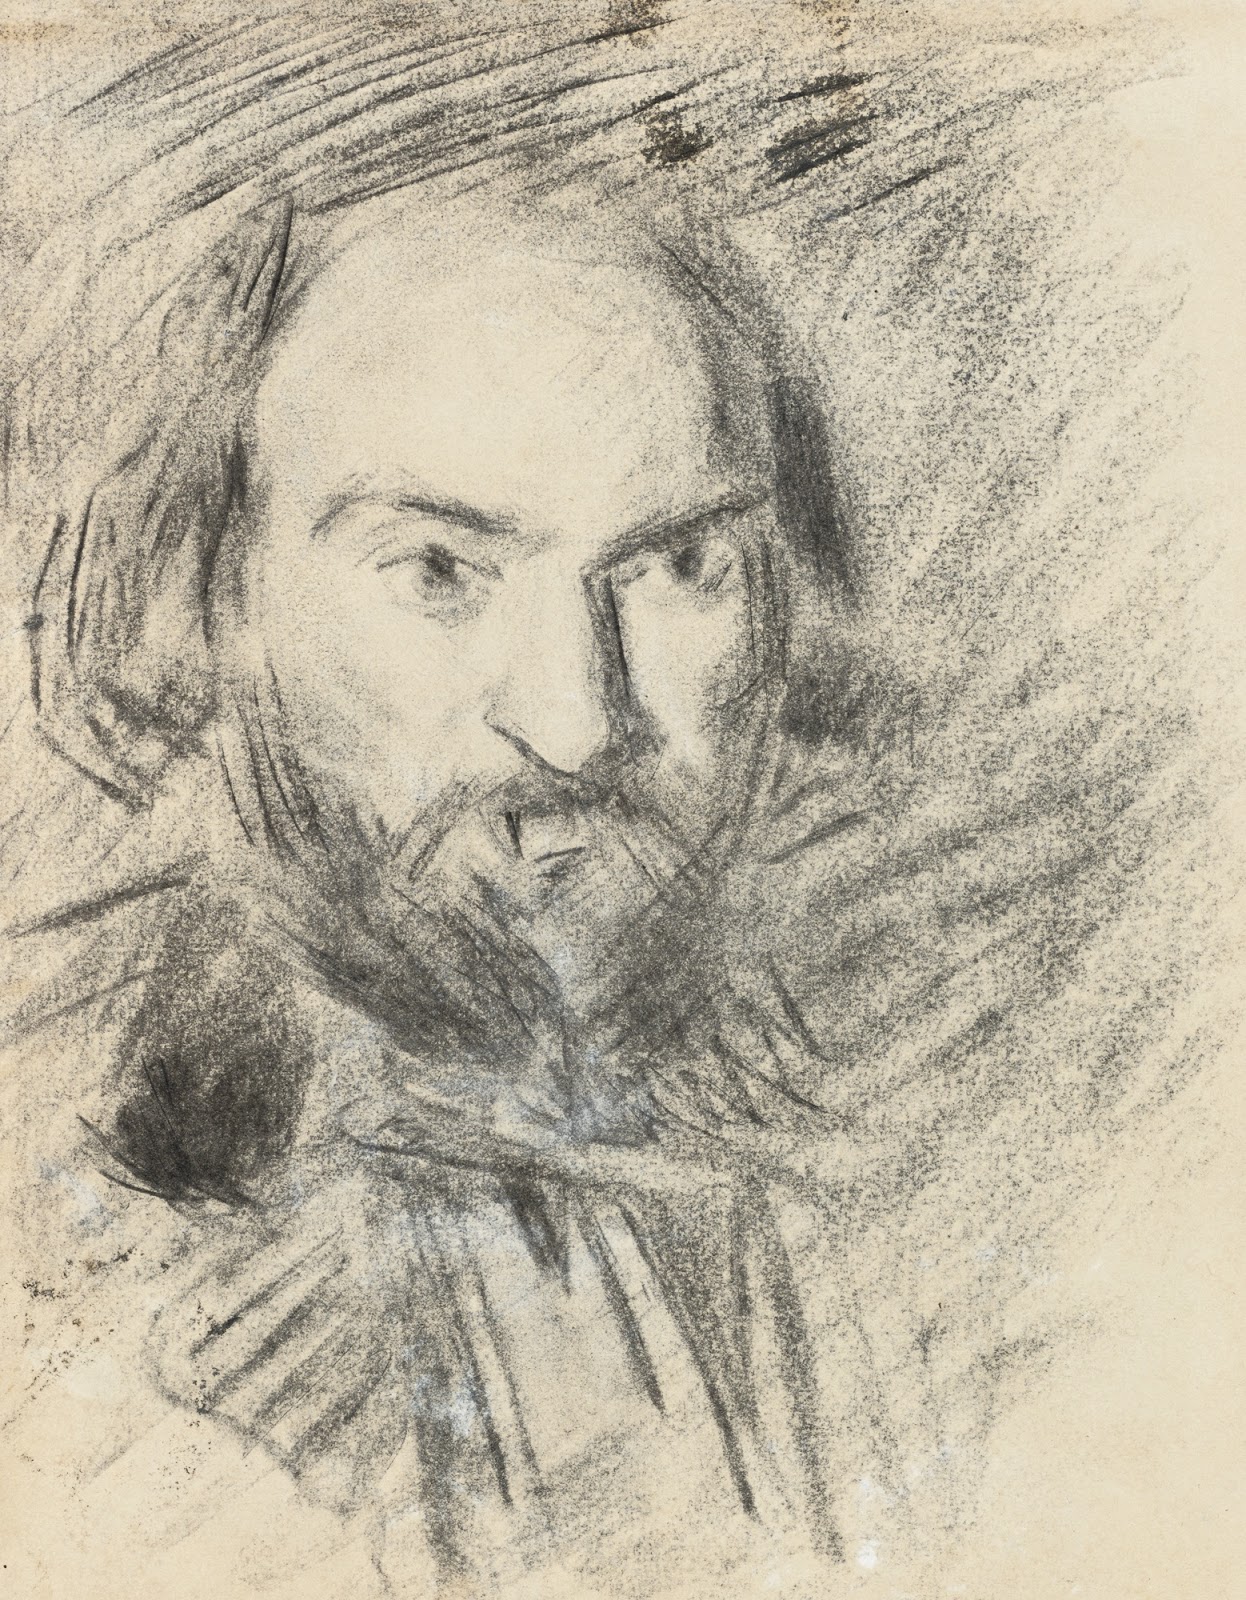 Paul+Cezanne-1839-1906 (177).jpg